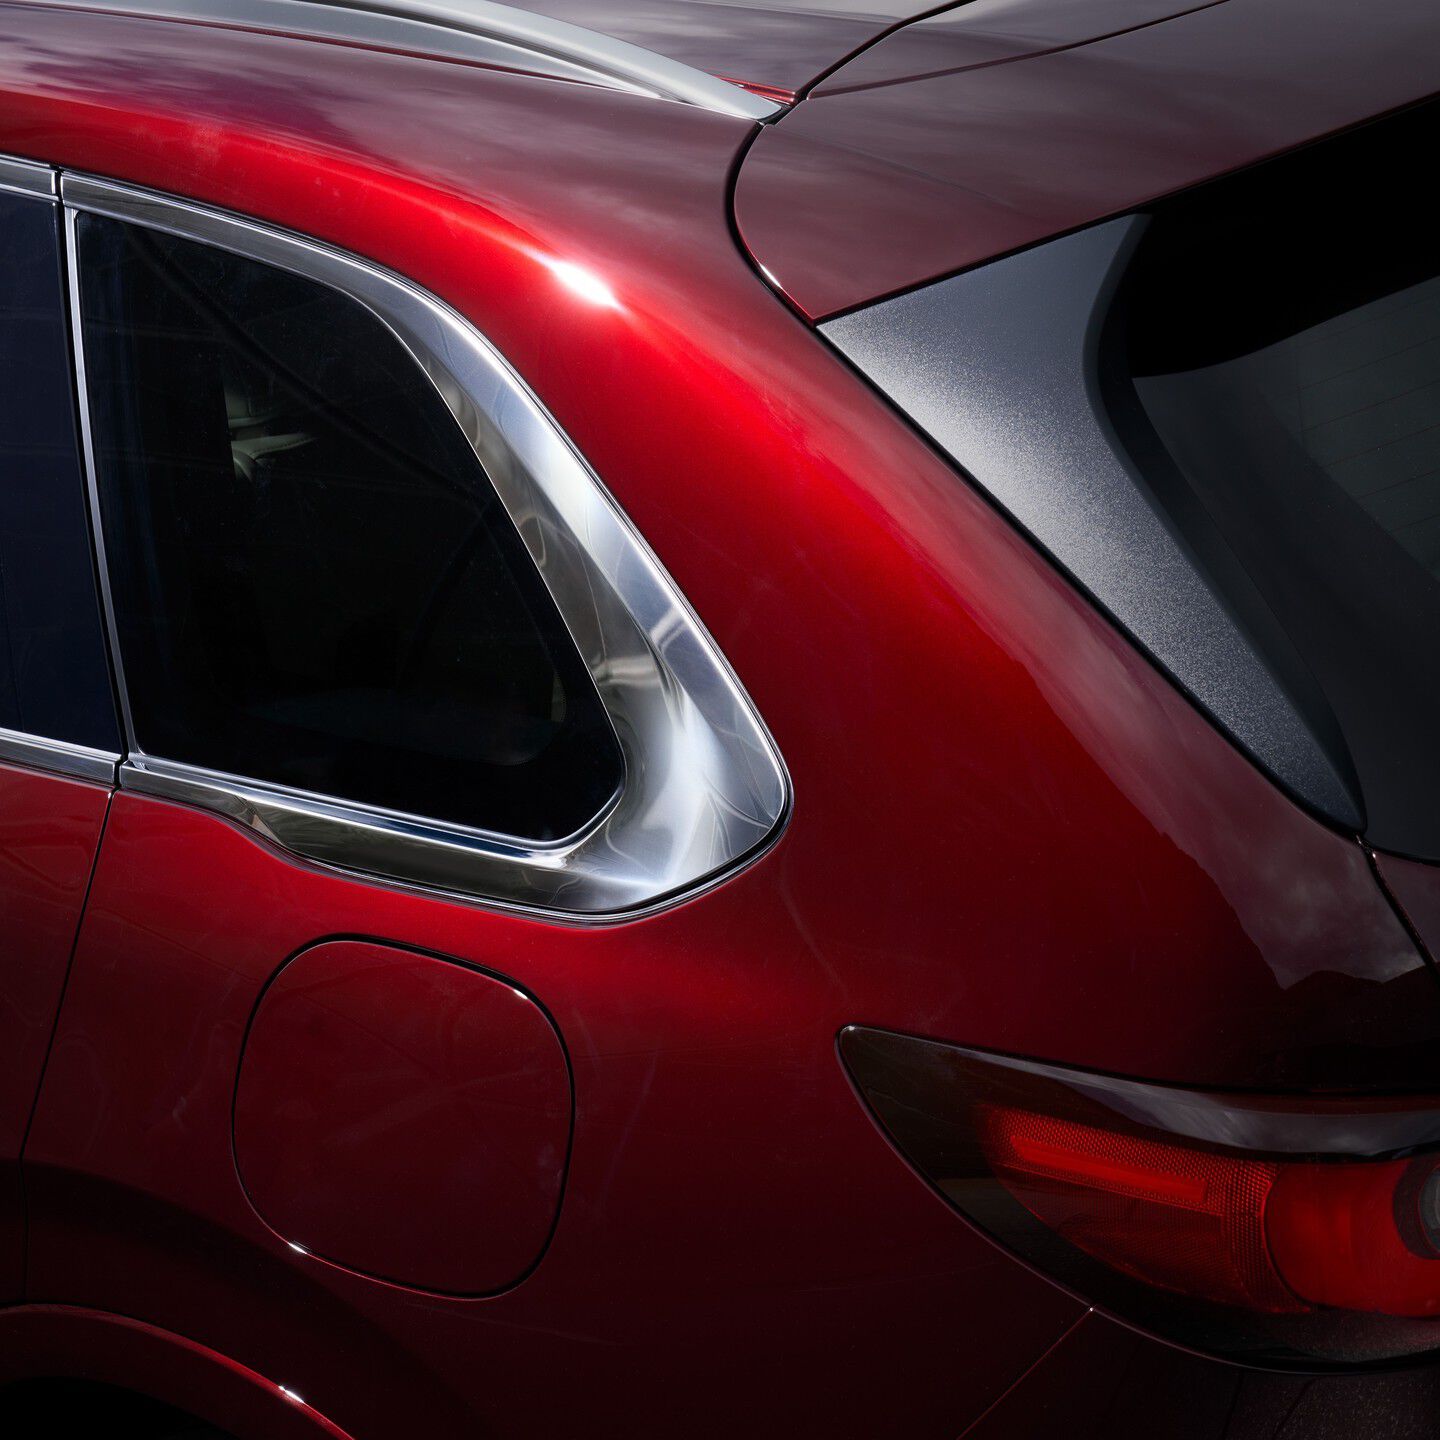 The Rear Quarter of the All new Mazda CX-80